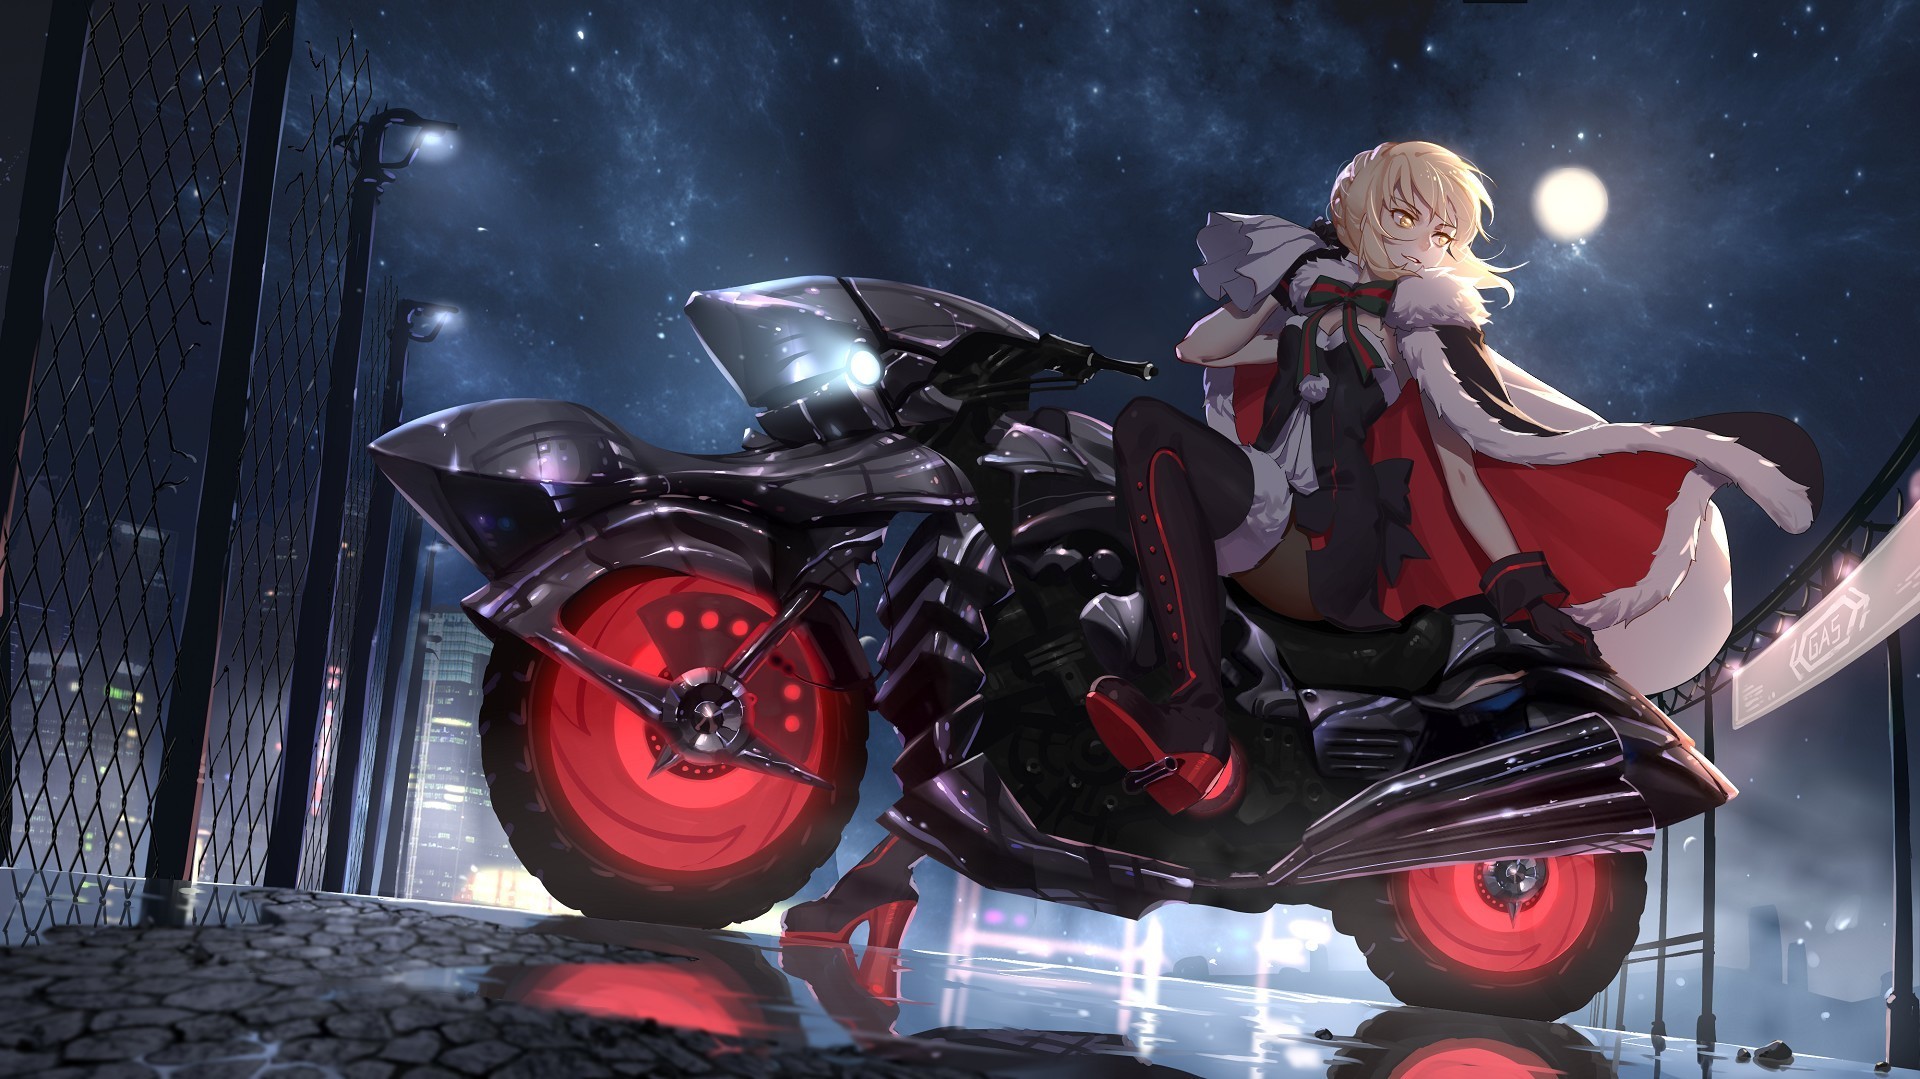 Wallpaper Biker, saber of red, Fate/Grand Order, anime girl